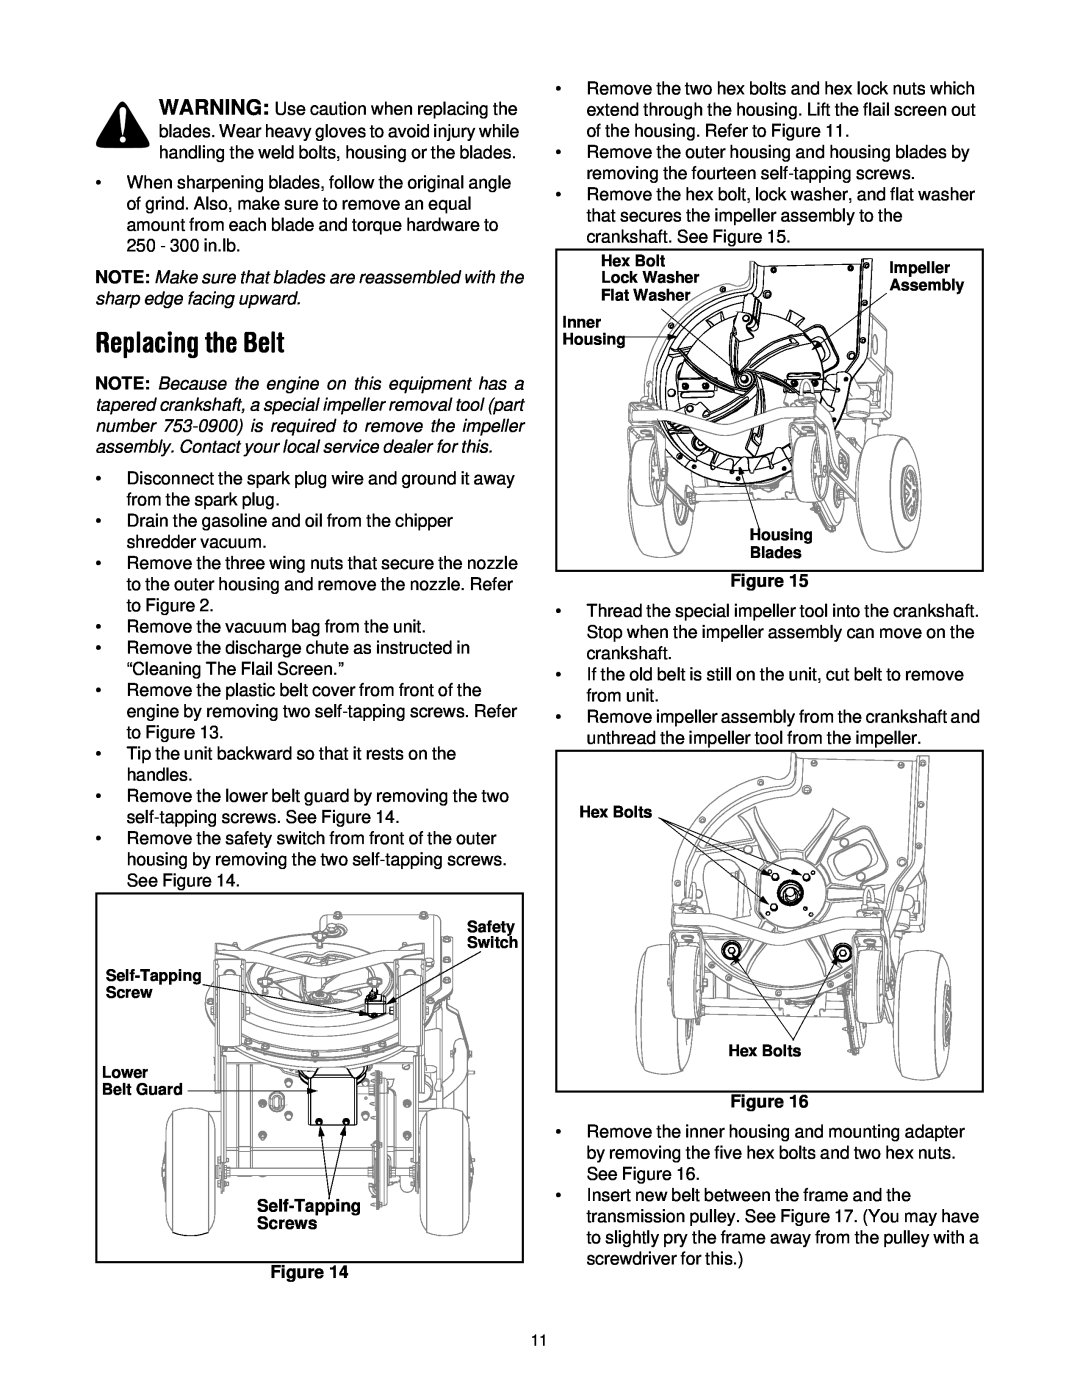 Troy-Bilt CSV206 manual Replacing the Belt, Self-Tapping, Screws 